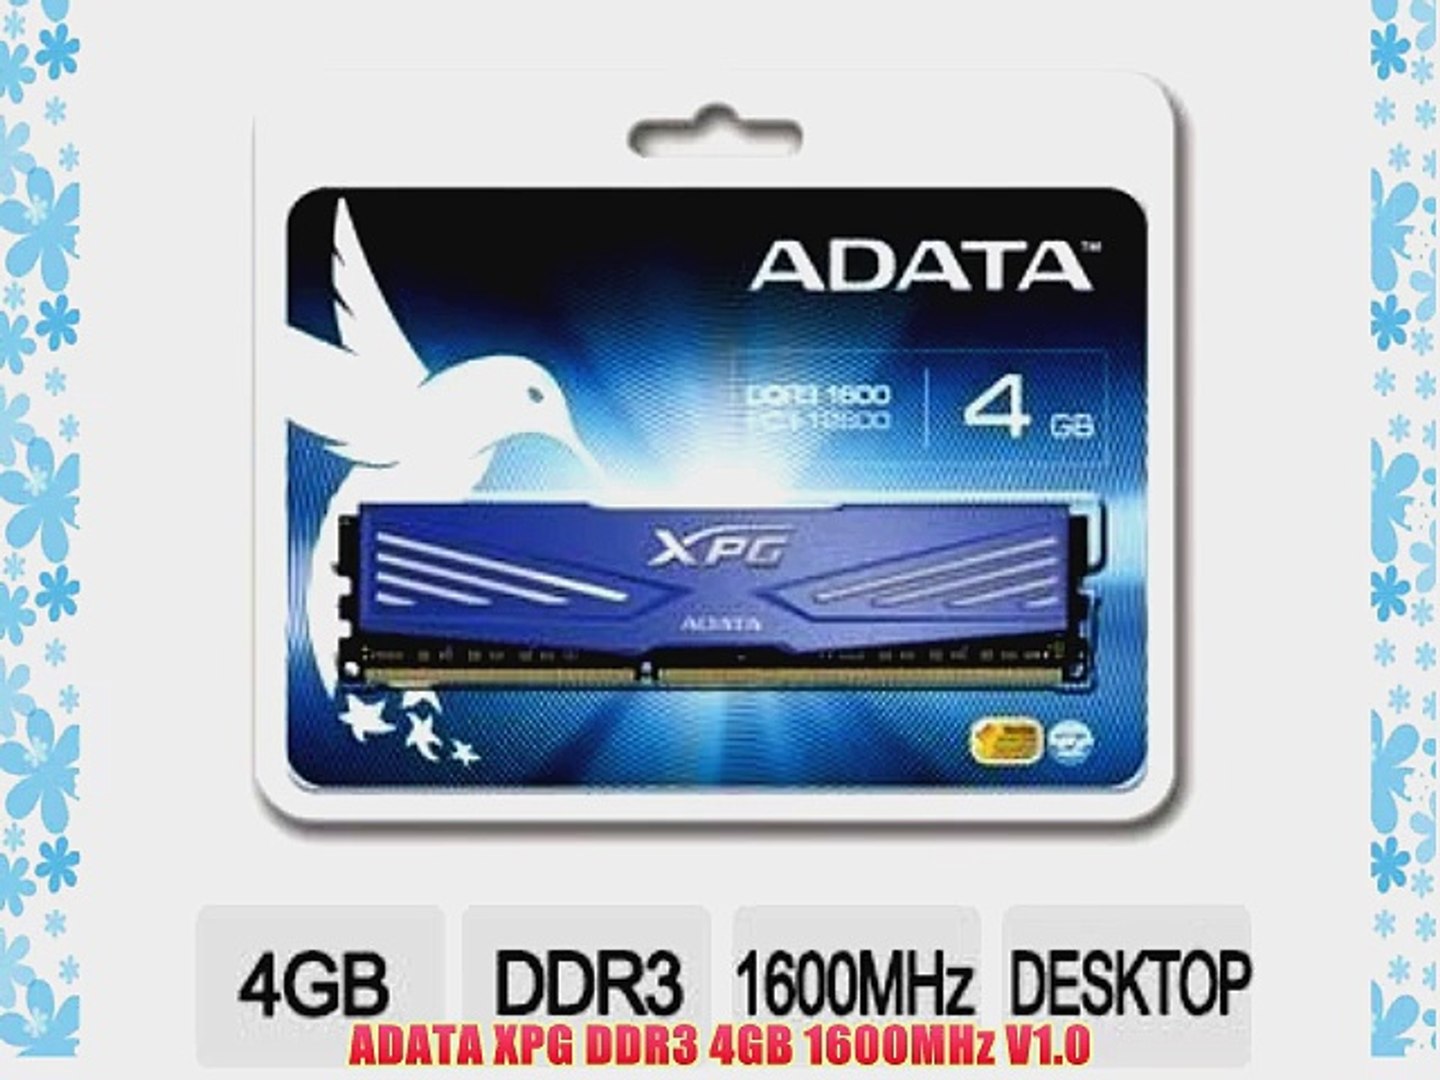 ADATA XPG DDR3 4GB 1600MHz V1.0 - video Dailymotion